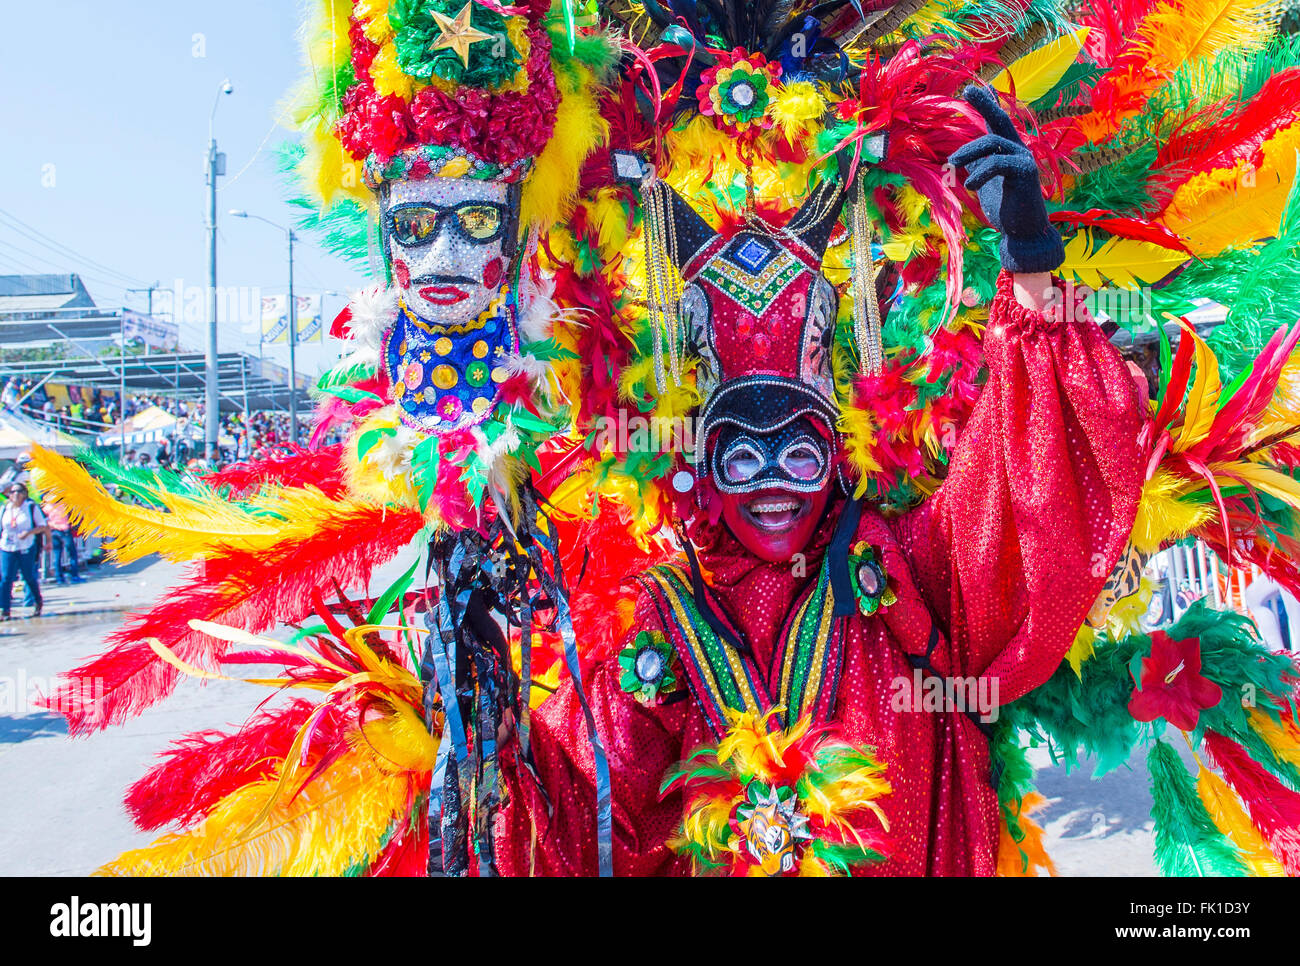 Participant in the Barranquilla Carnival in Barranquilla , Colombia Stock Photo